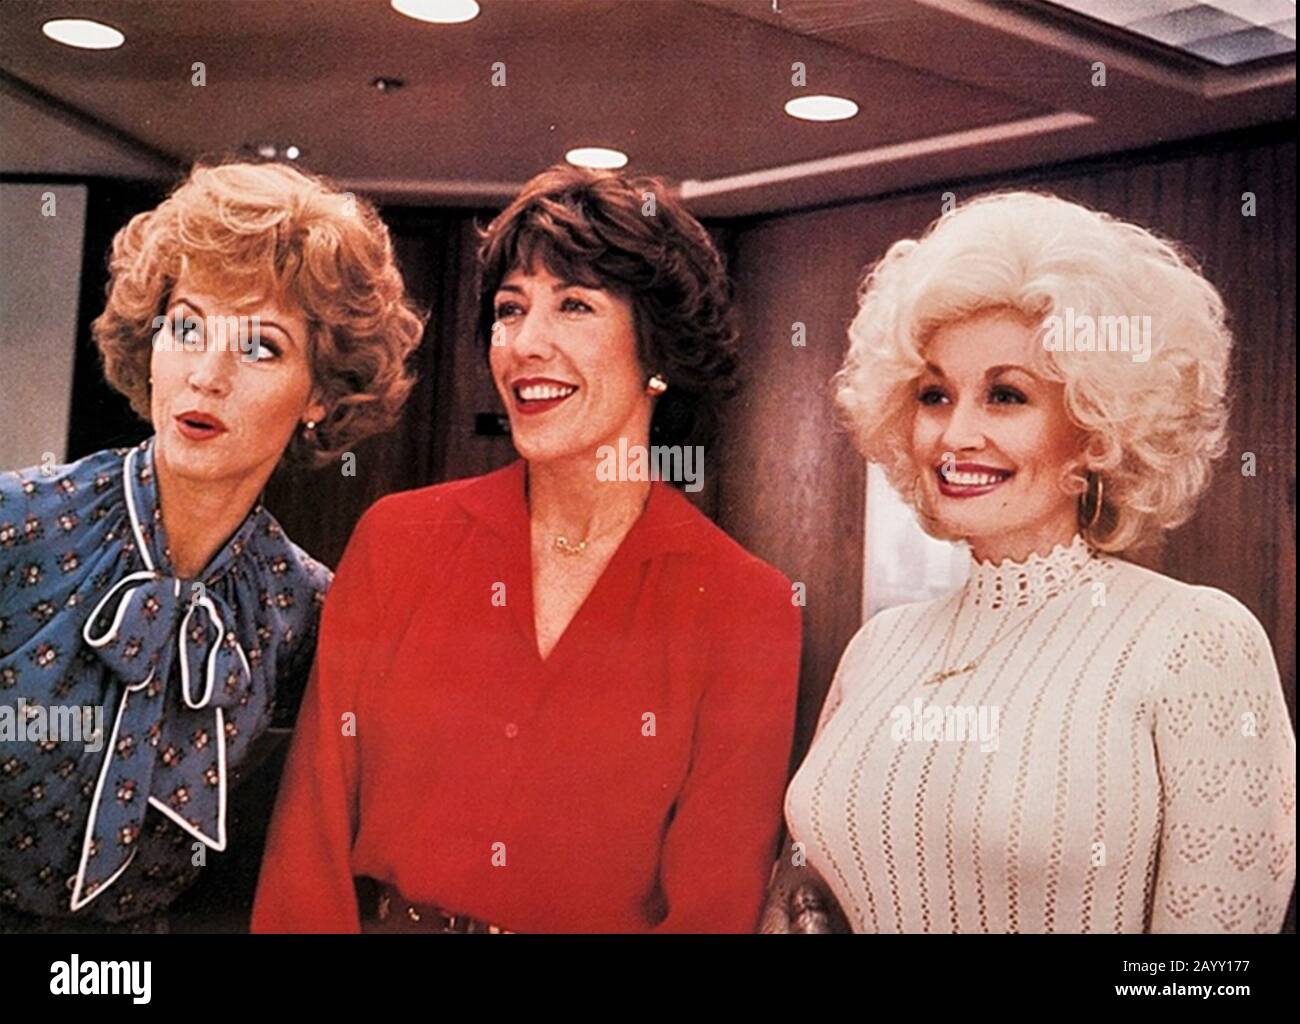 9 to 5 - 1980 20th Century Fox film with from left: Jane Fonda, Lily Tomlin, Dolly Parton. Stock Photo